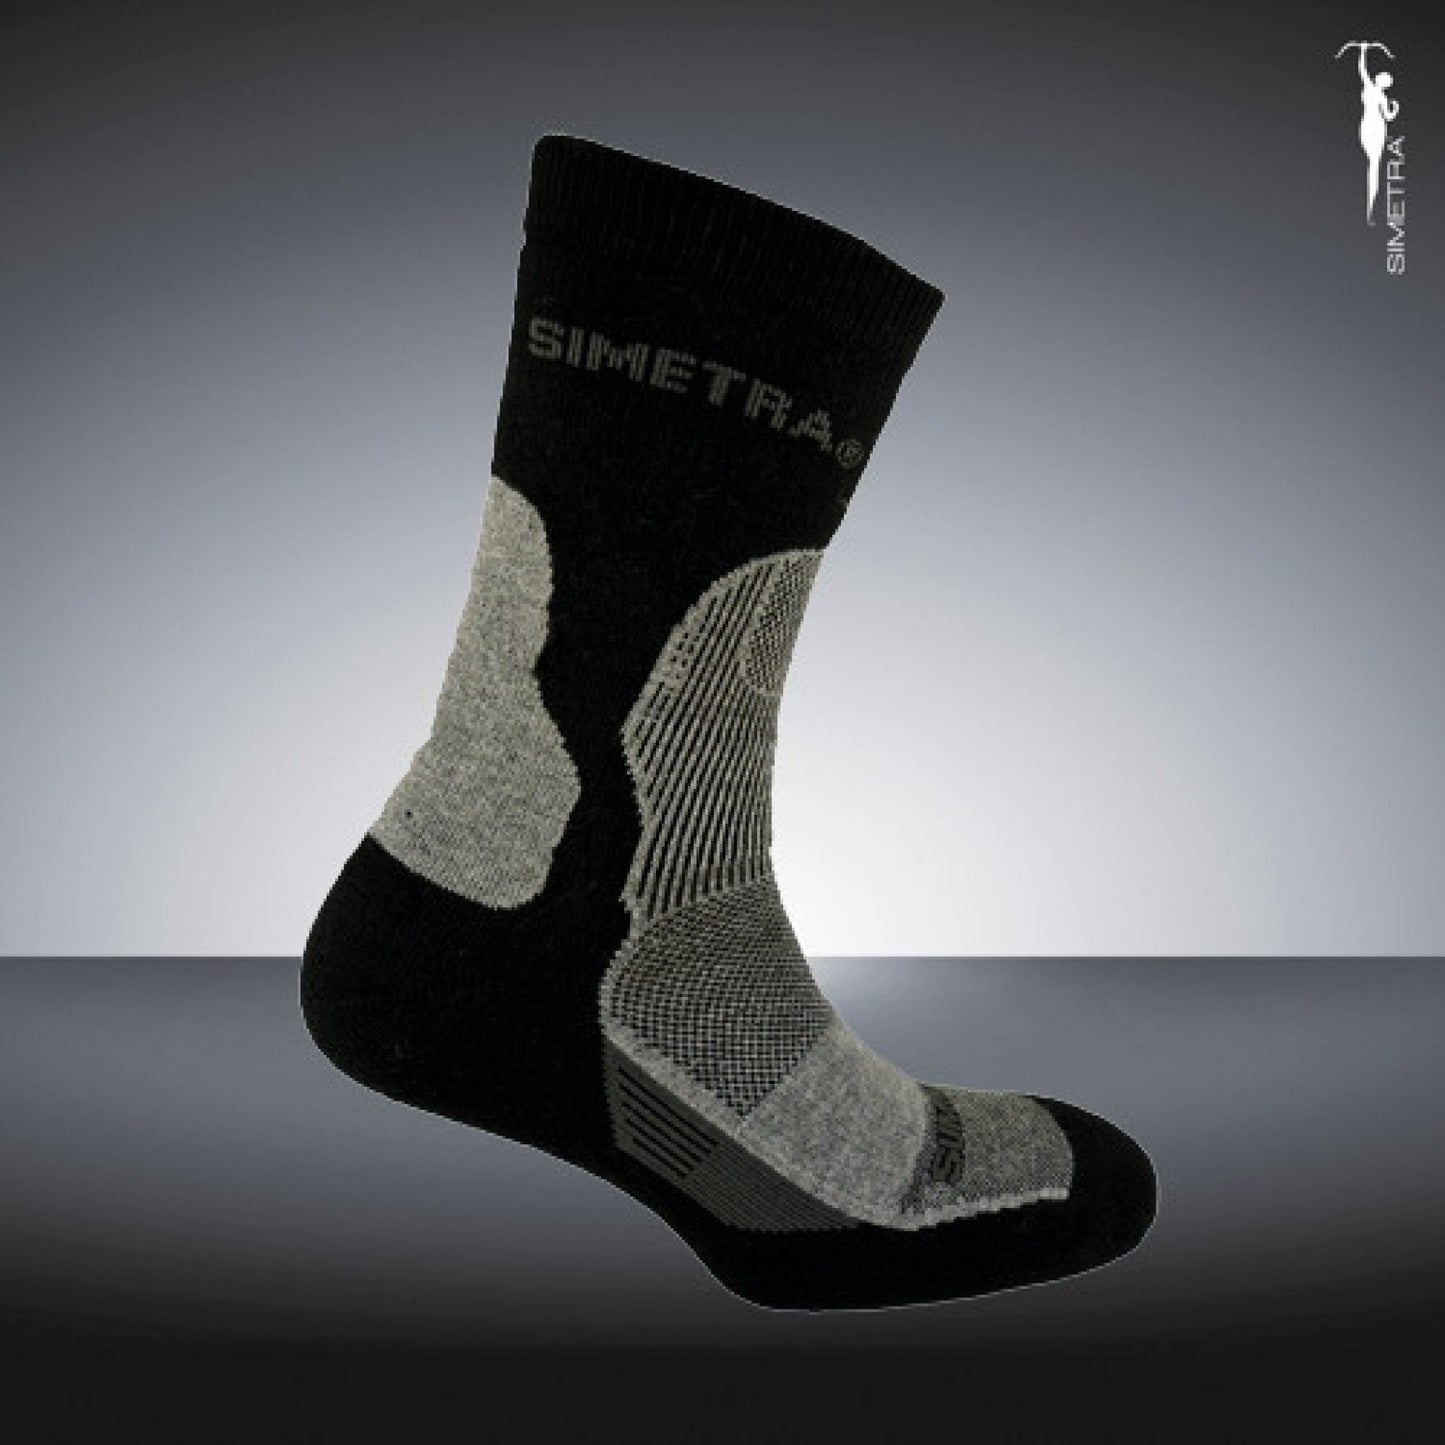 Simetra Sports Socks